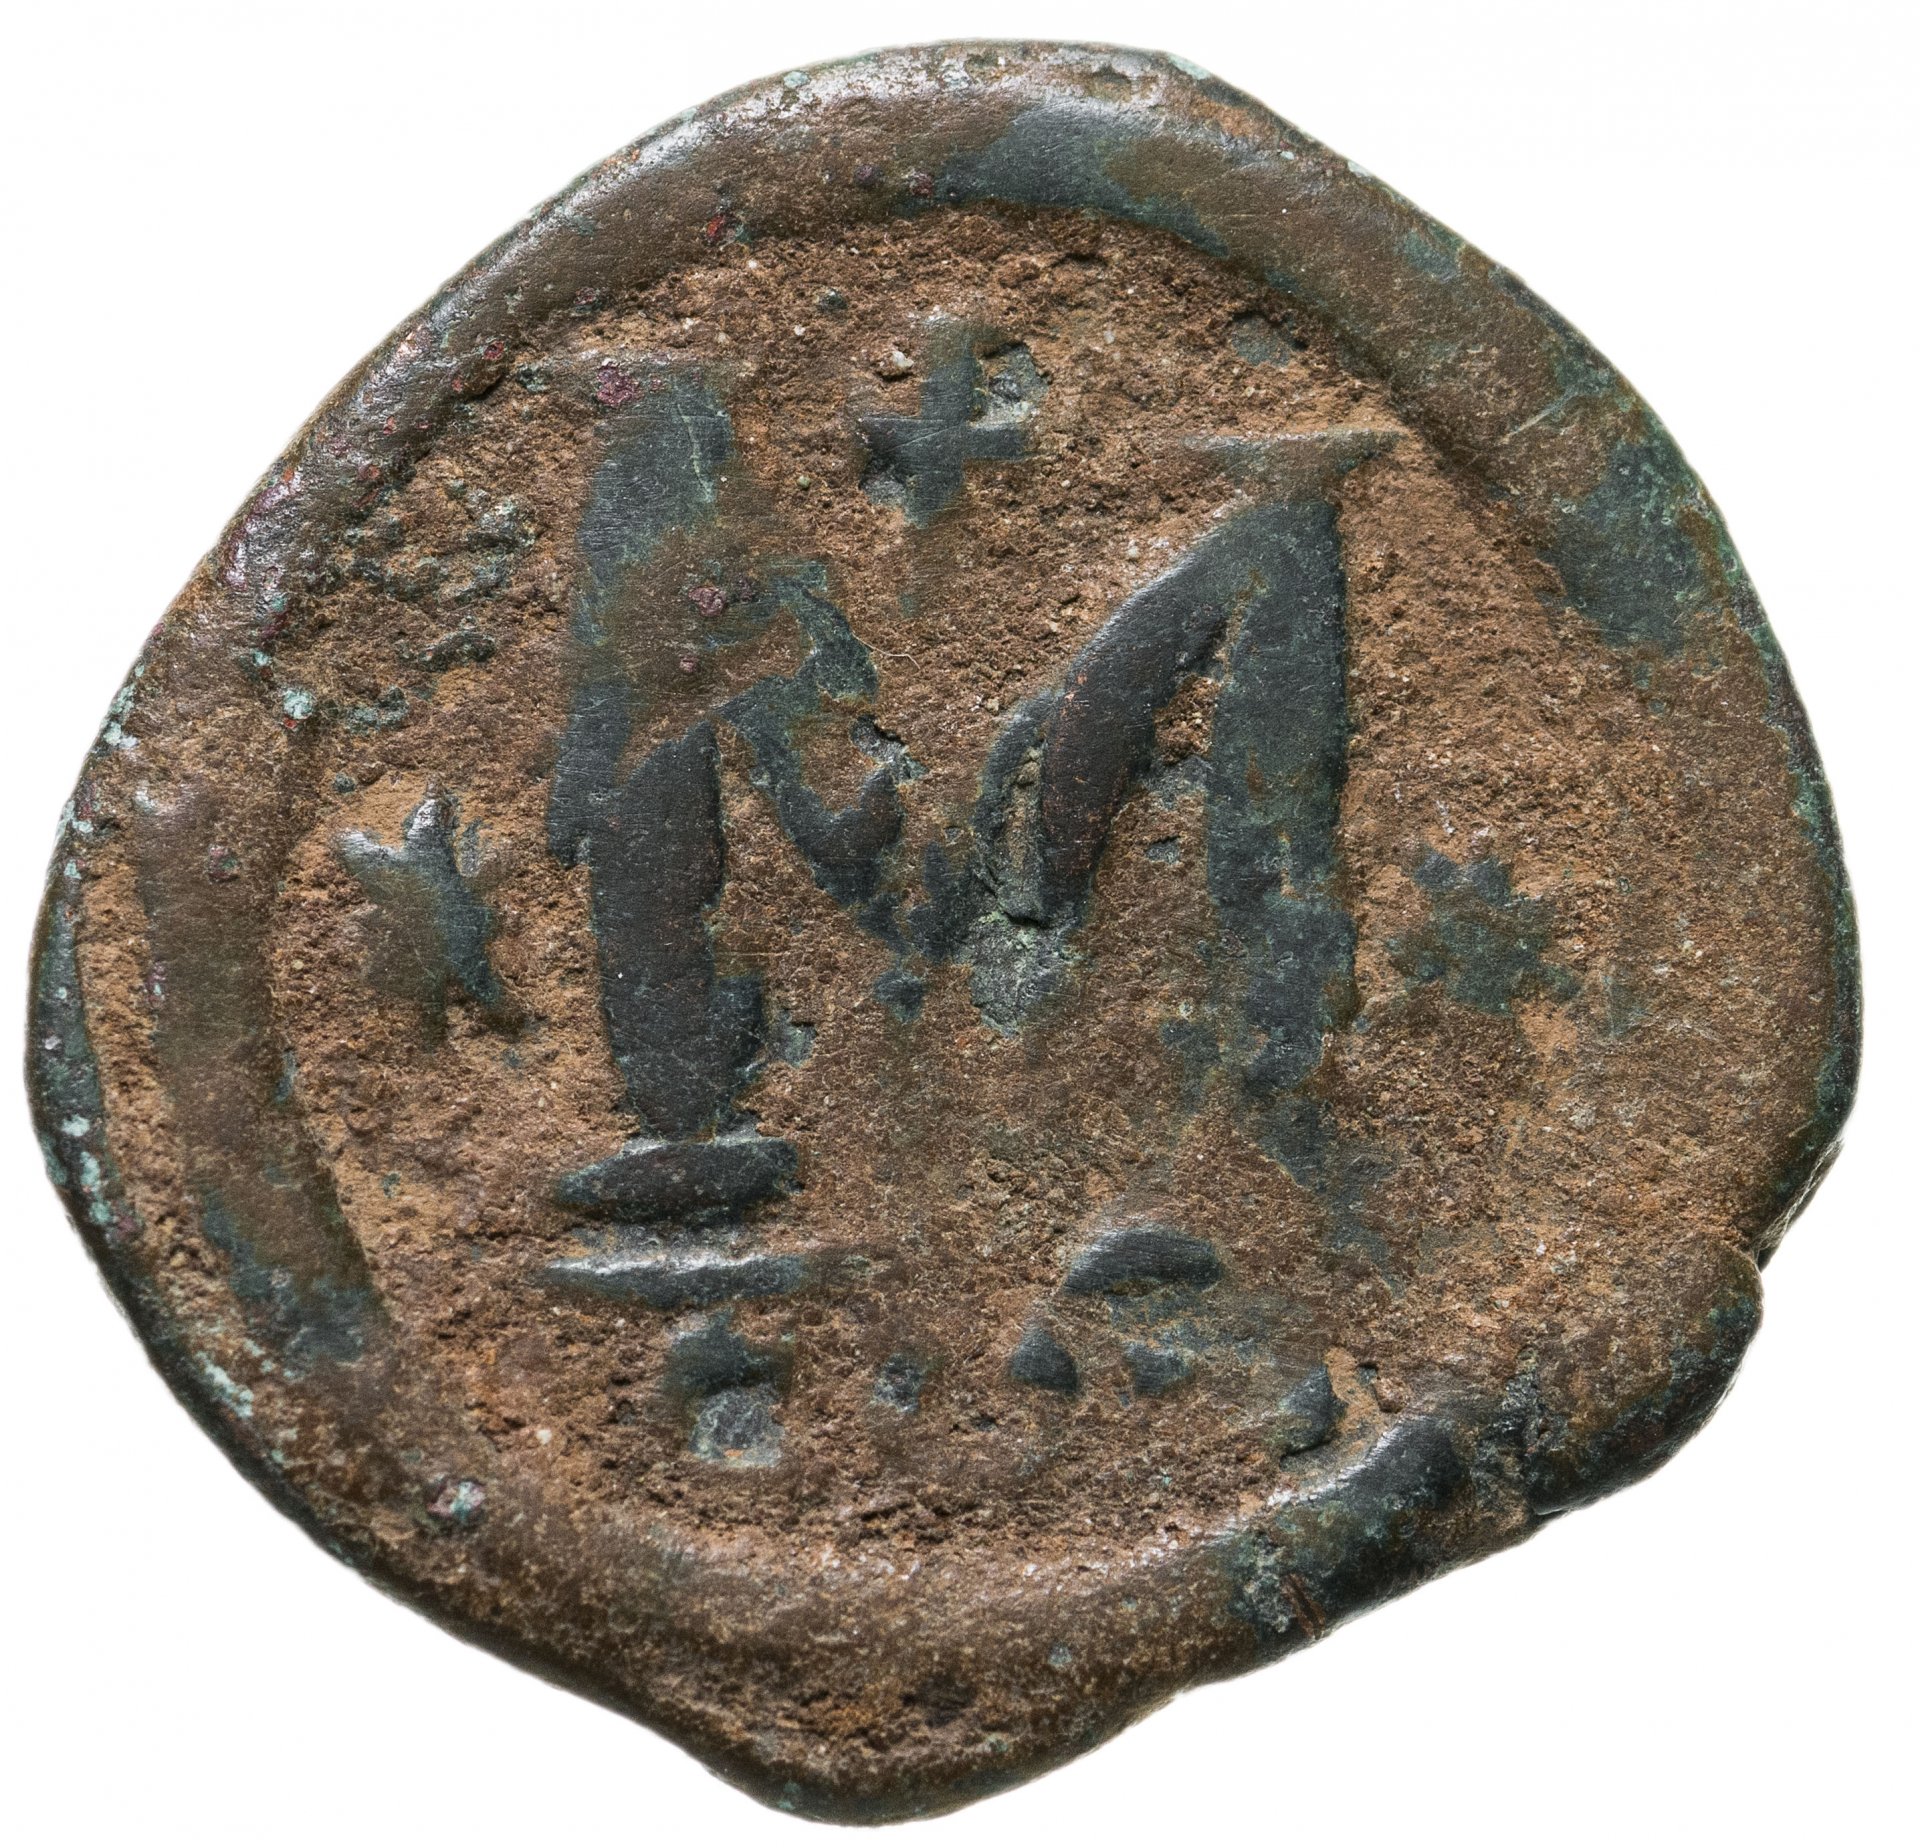 Бронзовая монета византии. Медные монеты Византии.